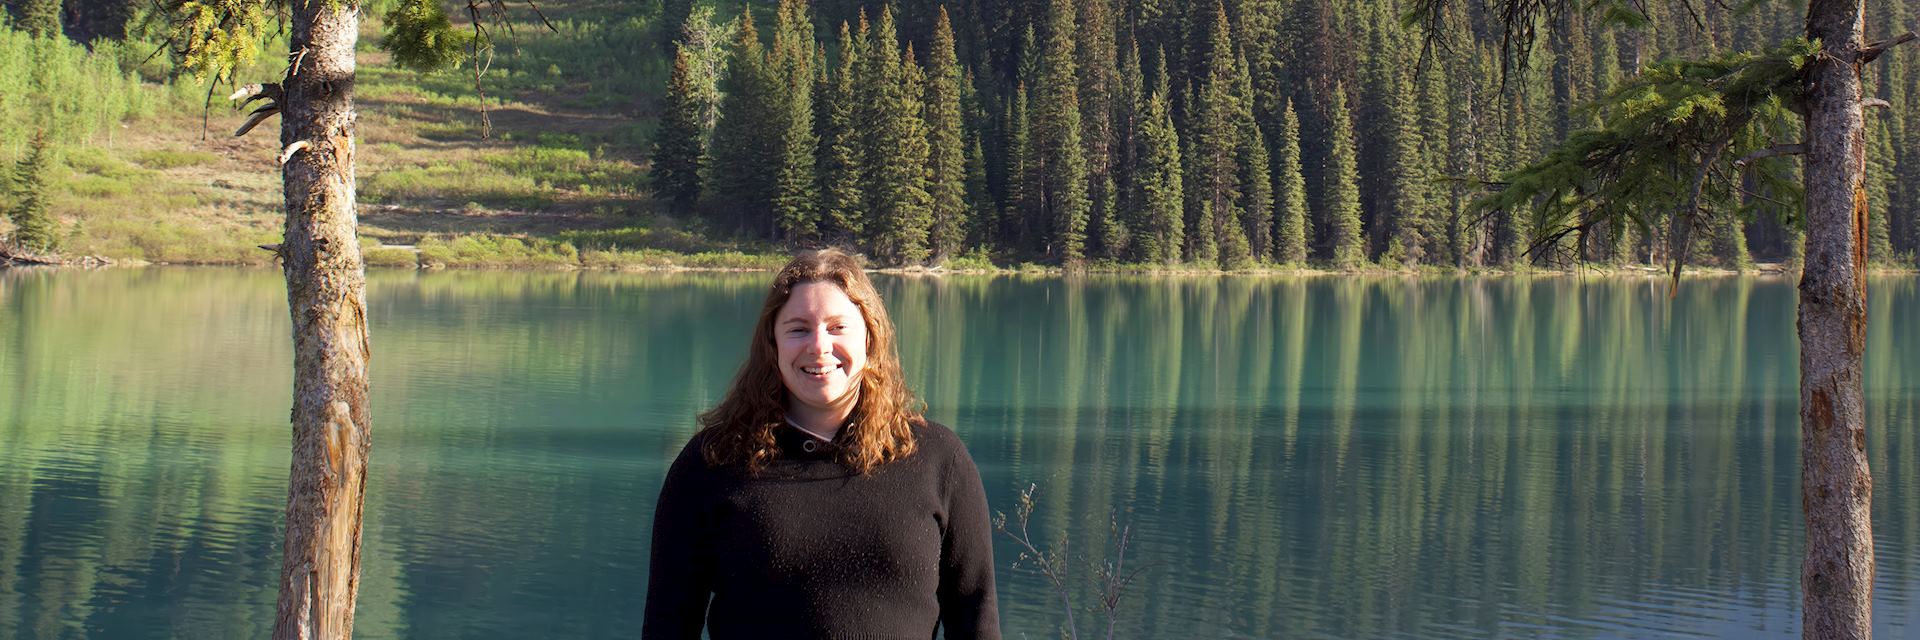 Milly visiting Emerald Lake, Alberta, Canada